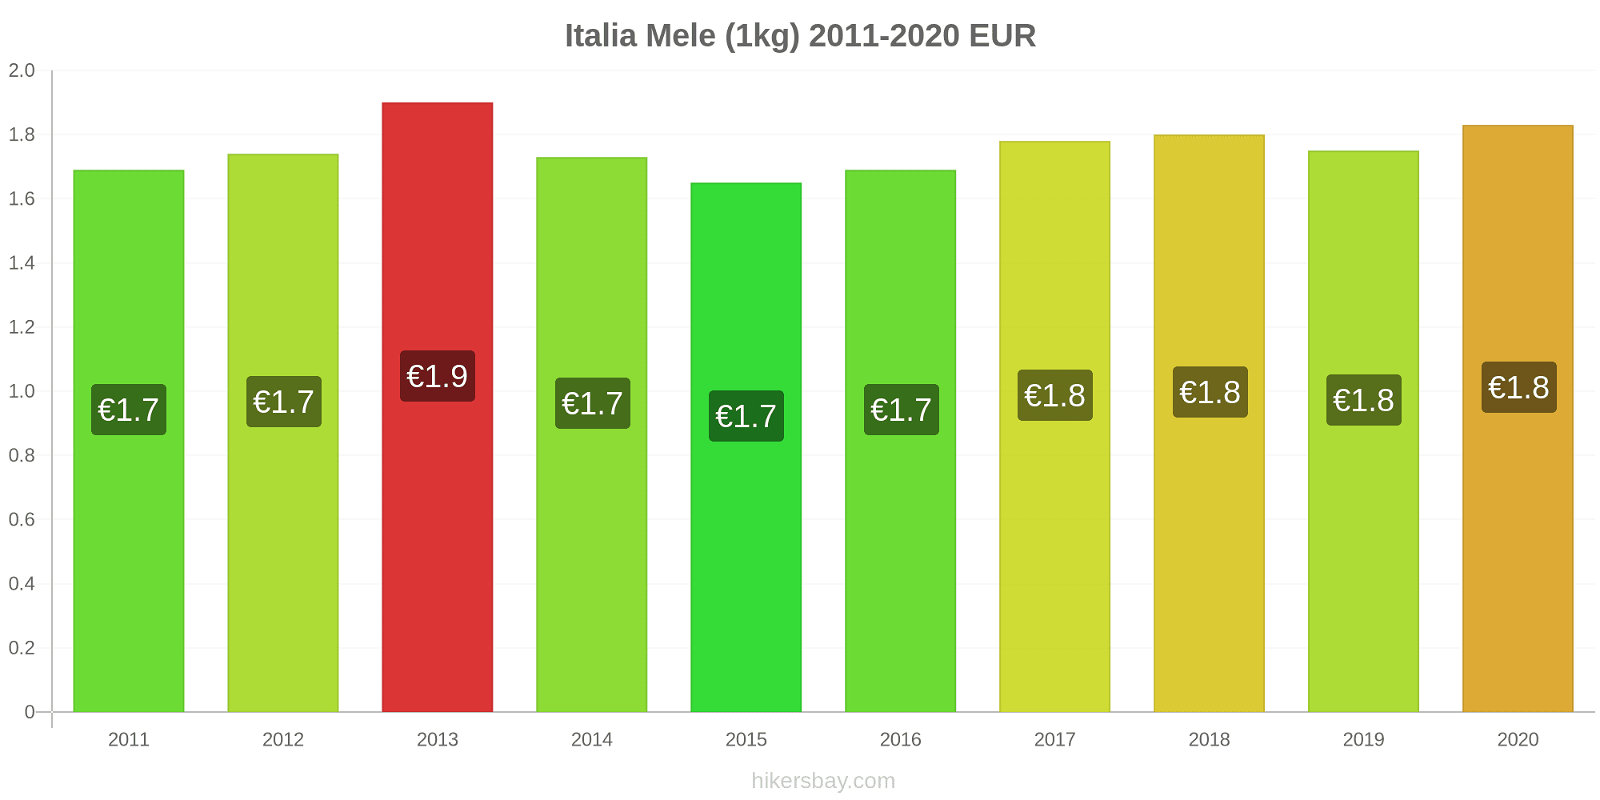 Italia variazioni di prezzo Mele (1kg) hikersbay.com